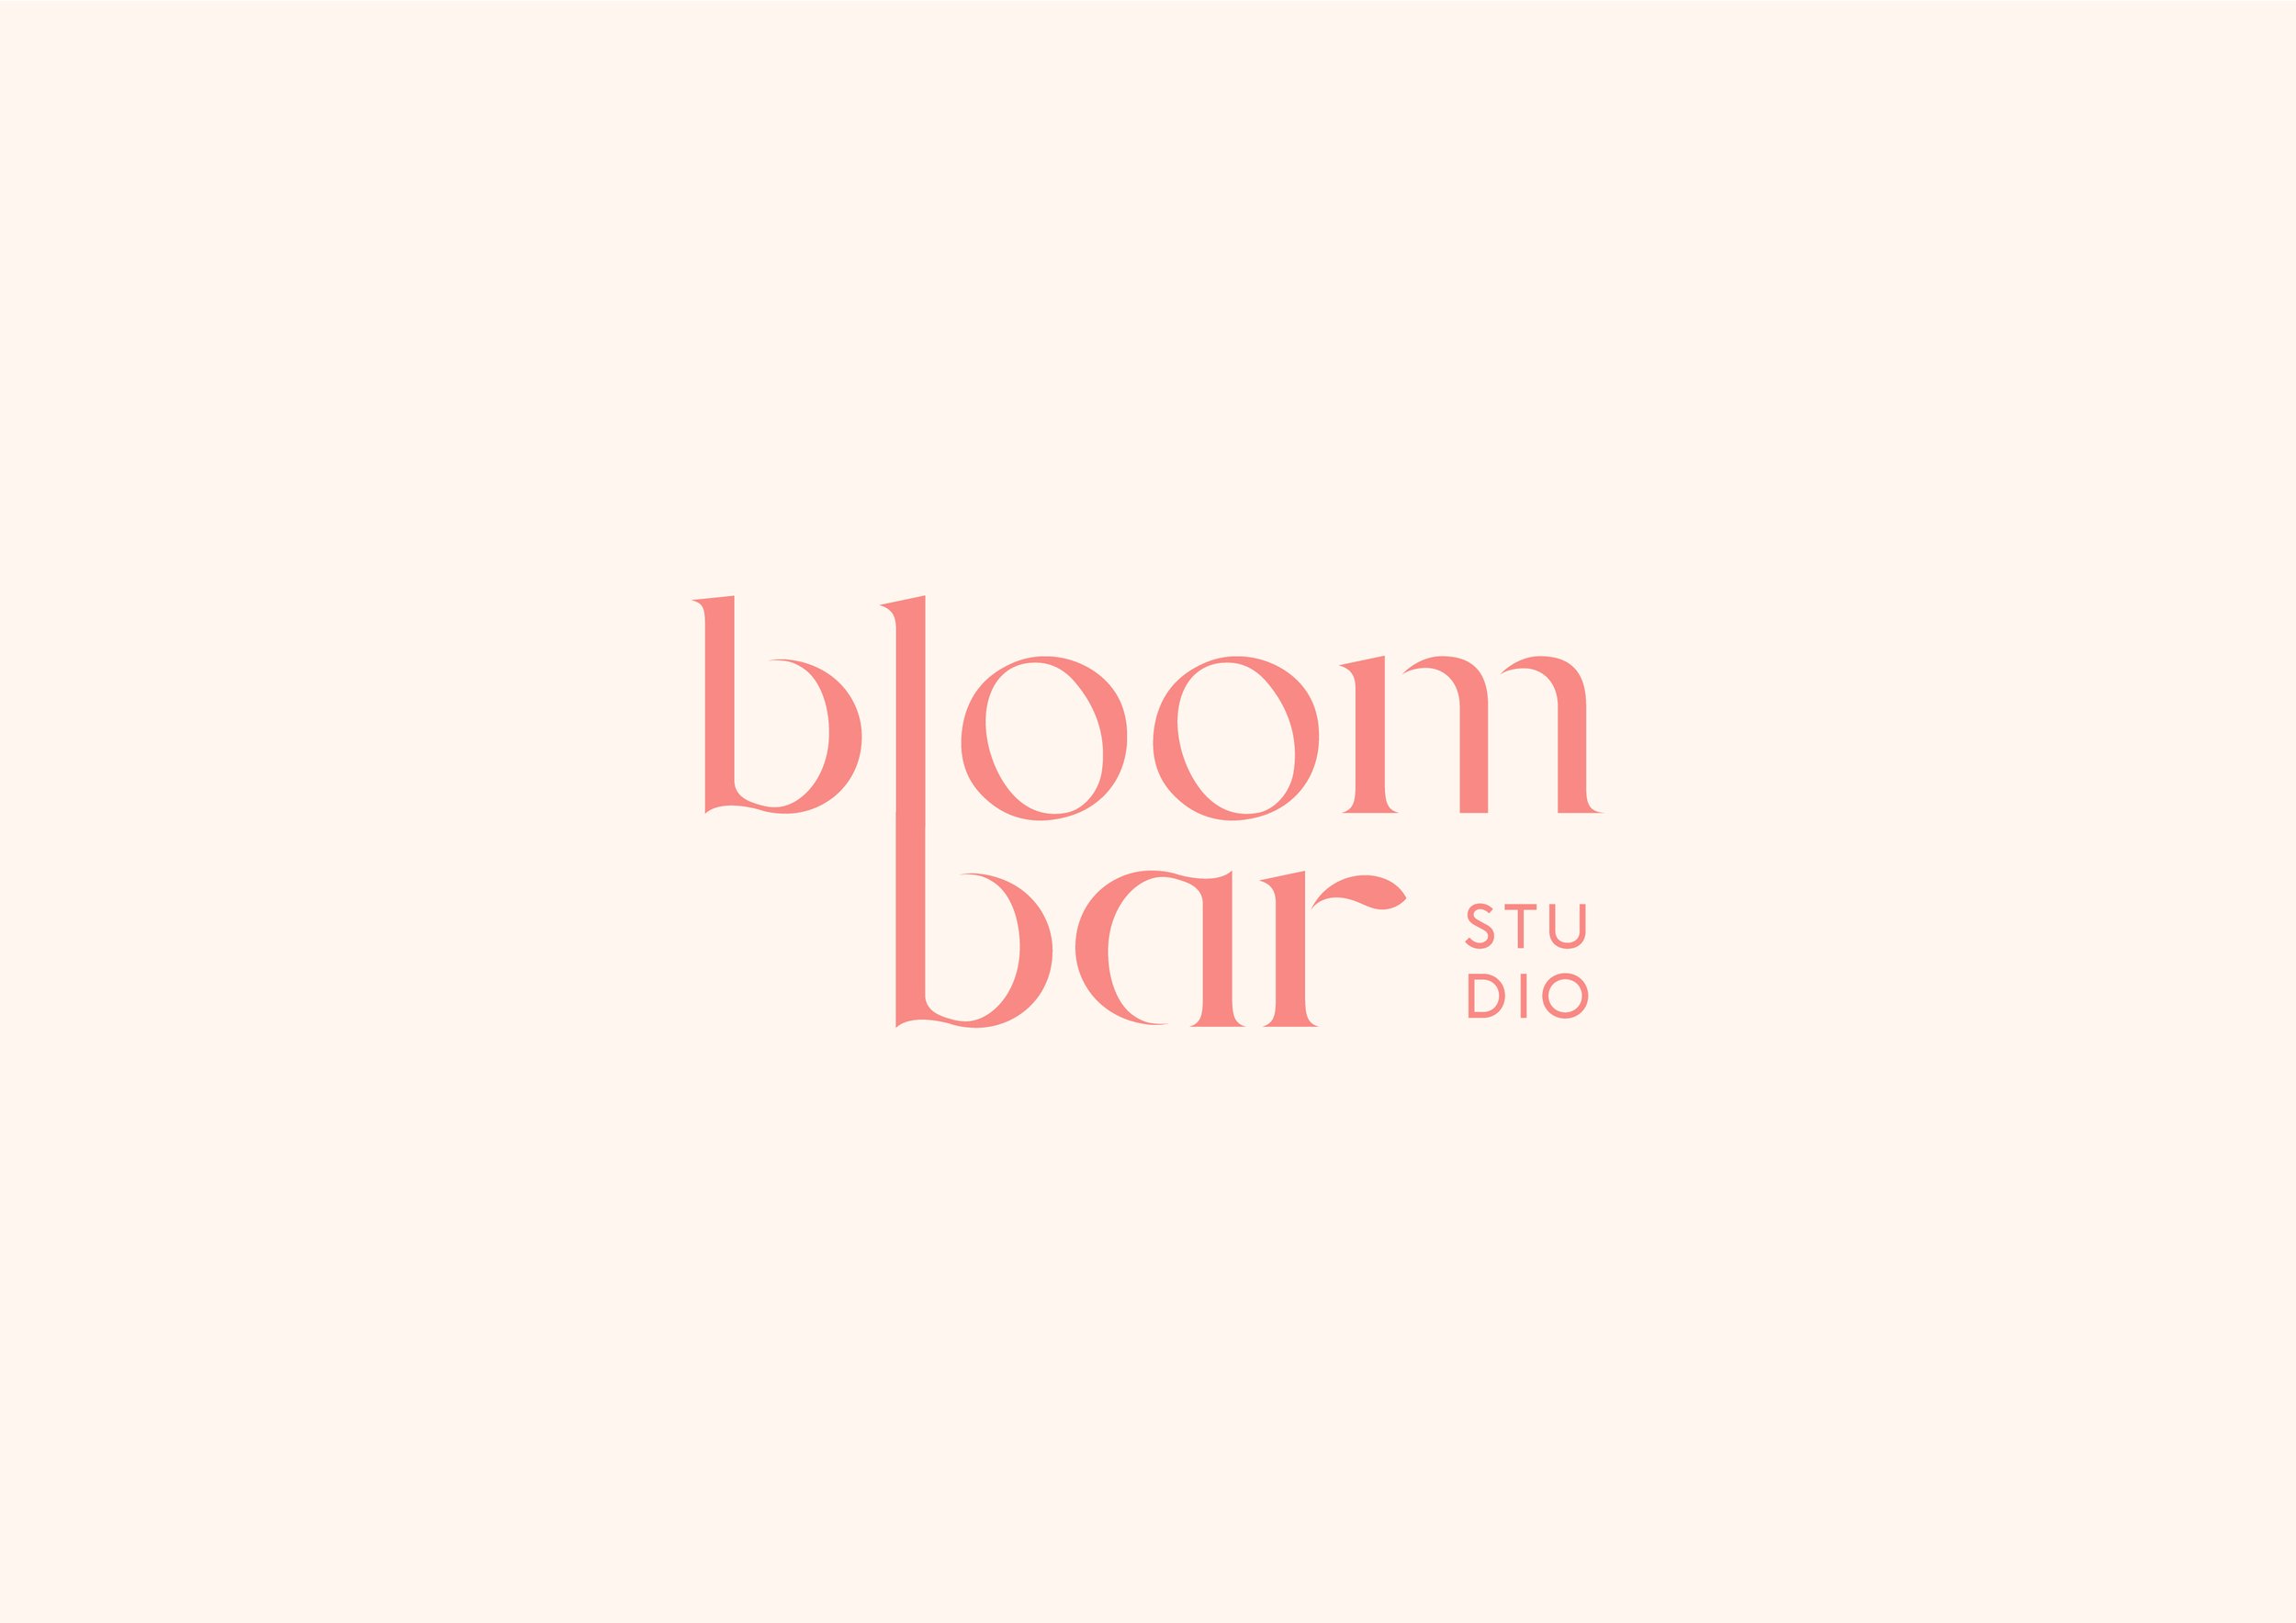 Bloom Bar Studio - Primary _ Secondary Logo-01 (1).jpg